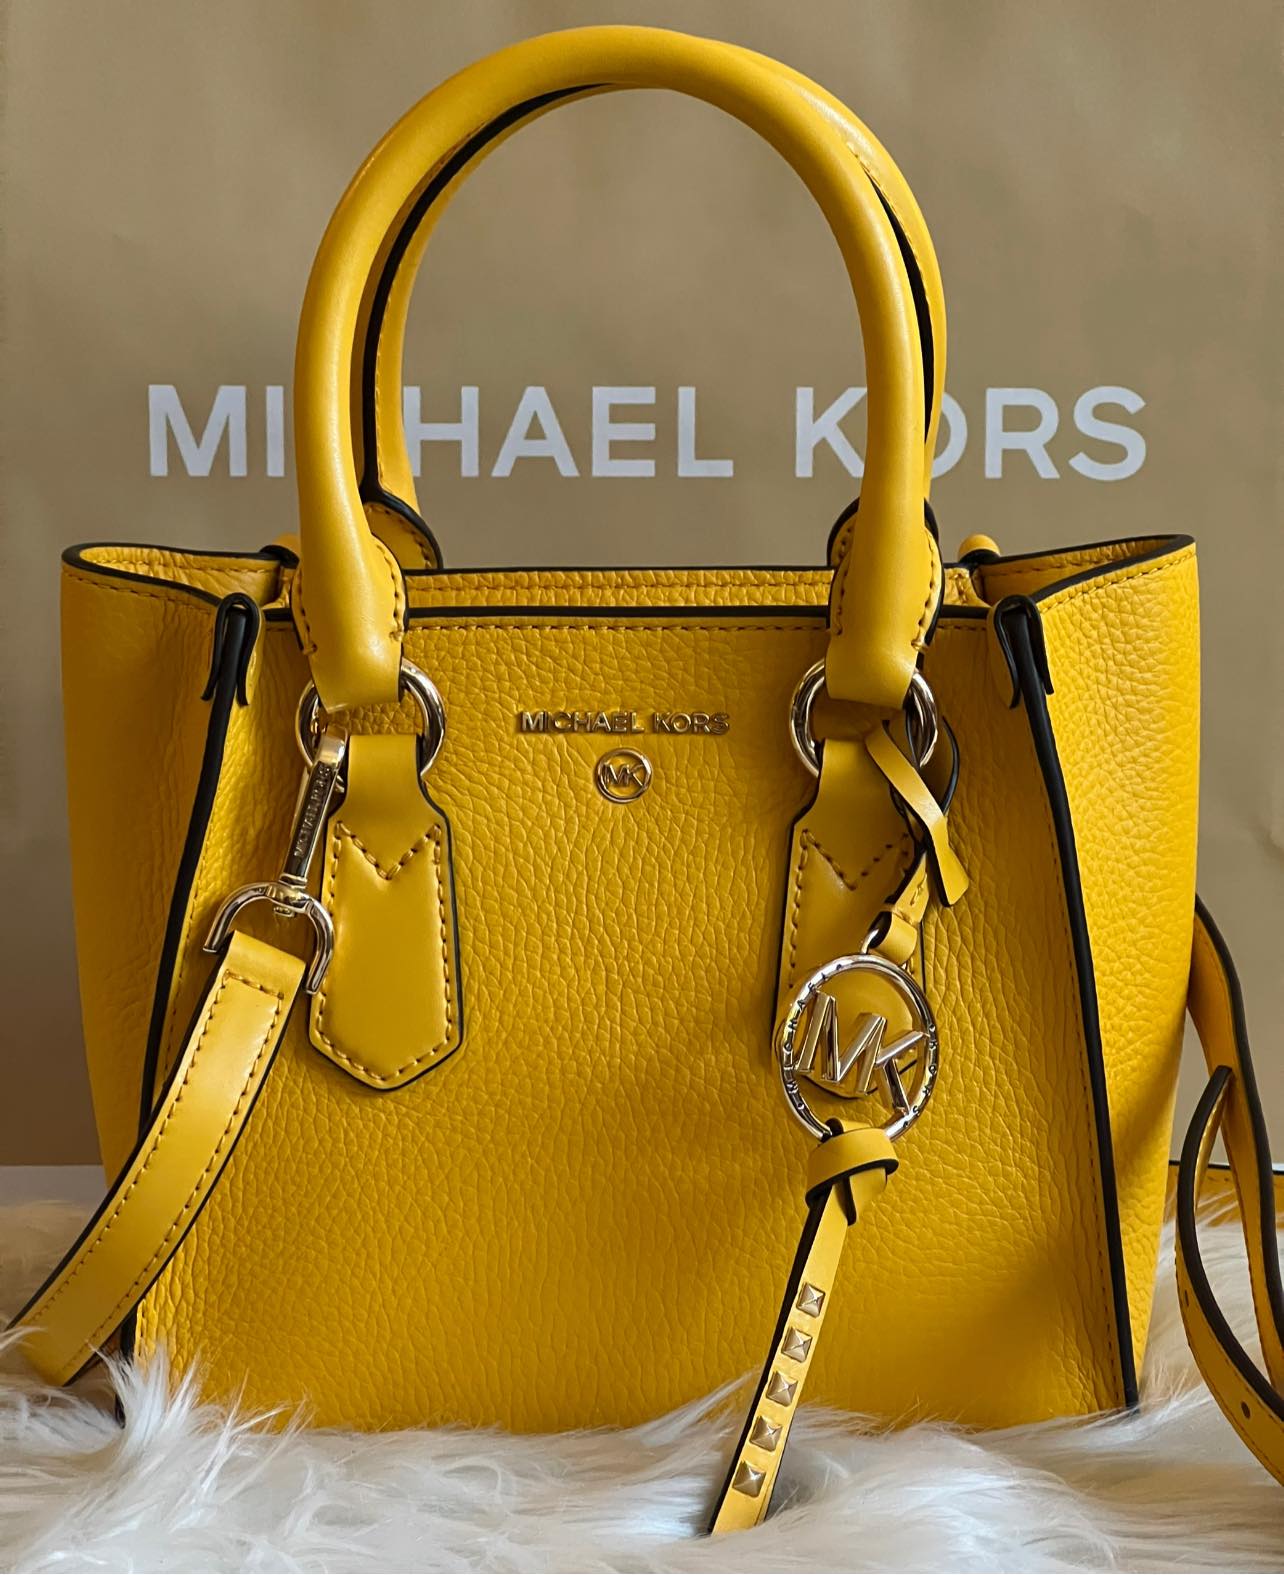 Michael Kors Kris Small Pebbled Leather Satchel